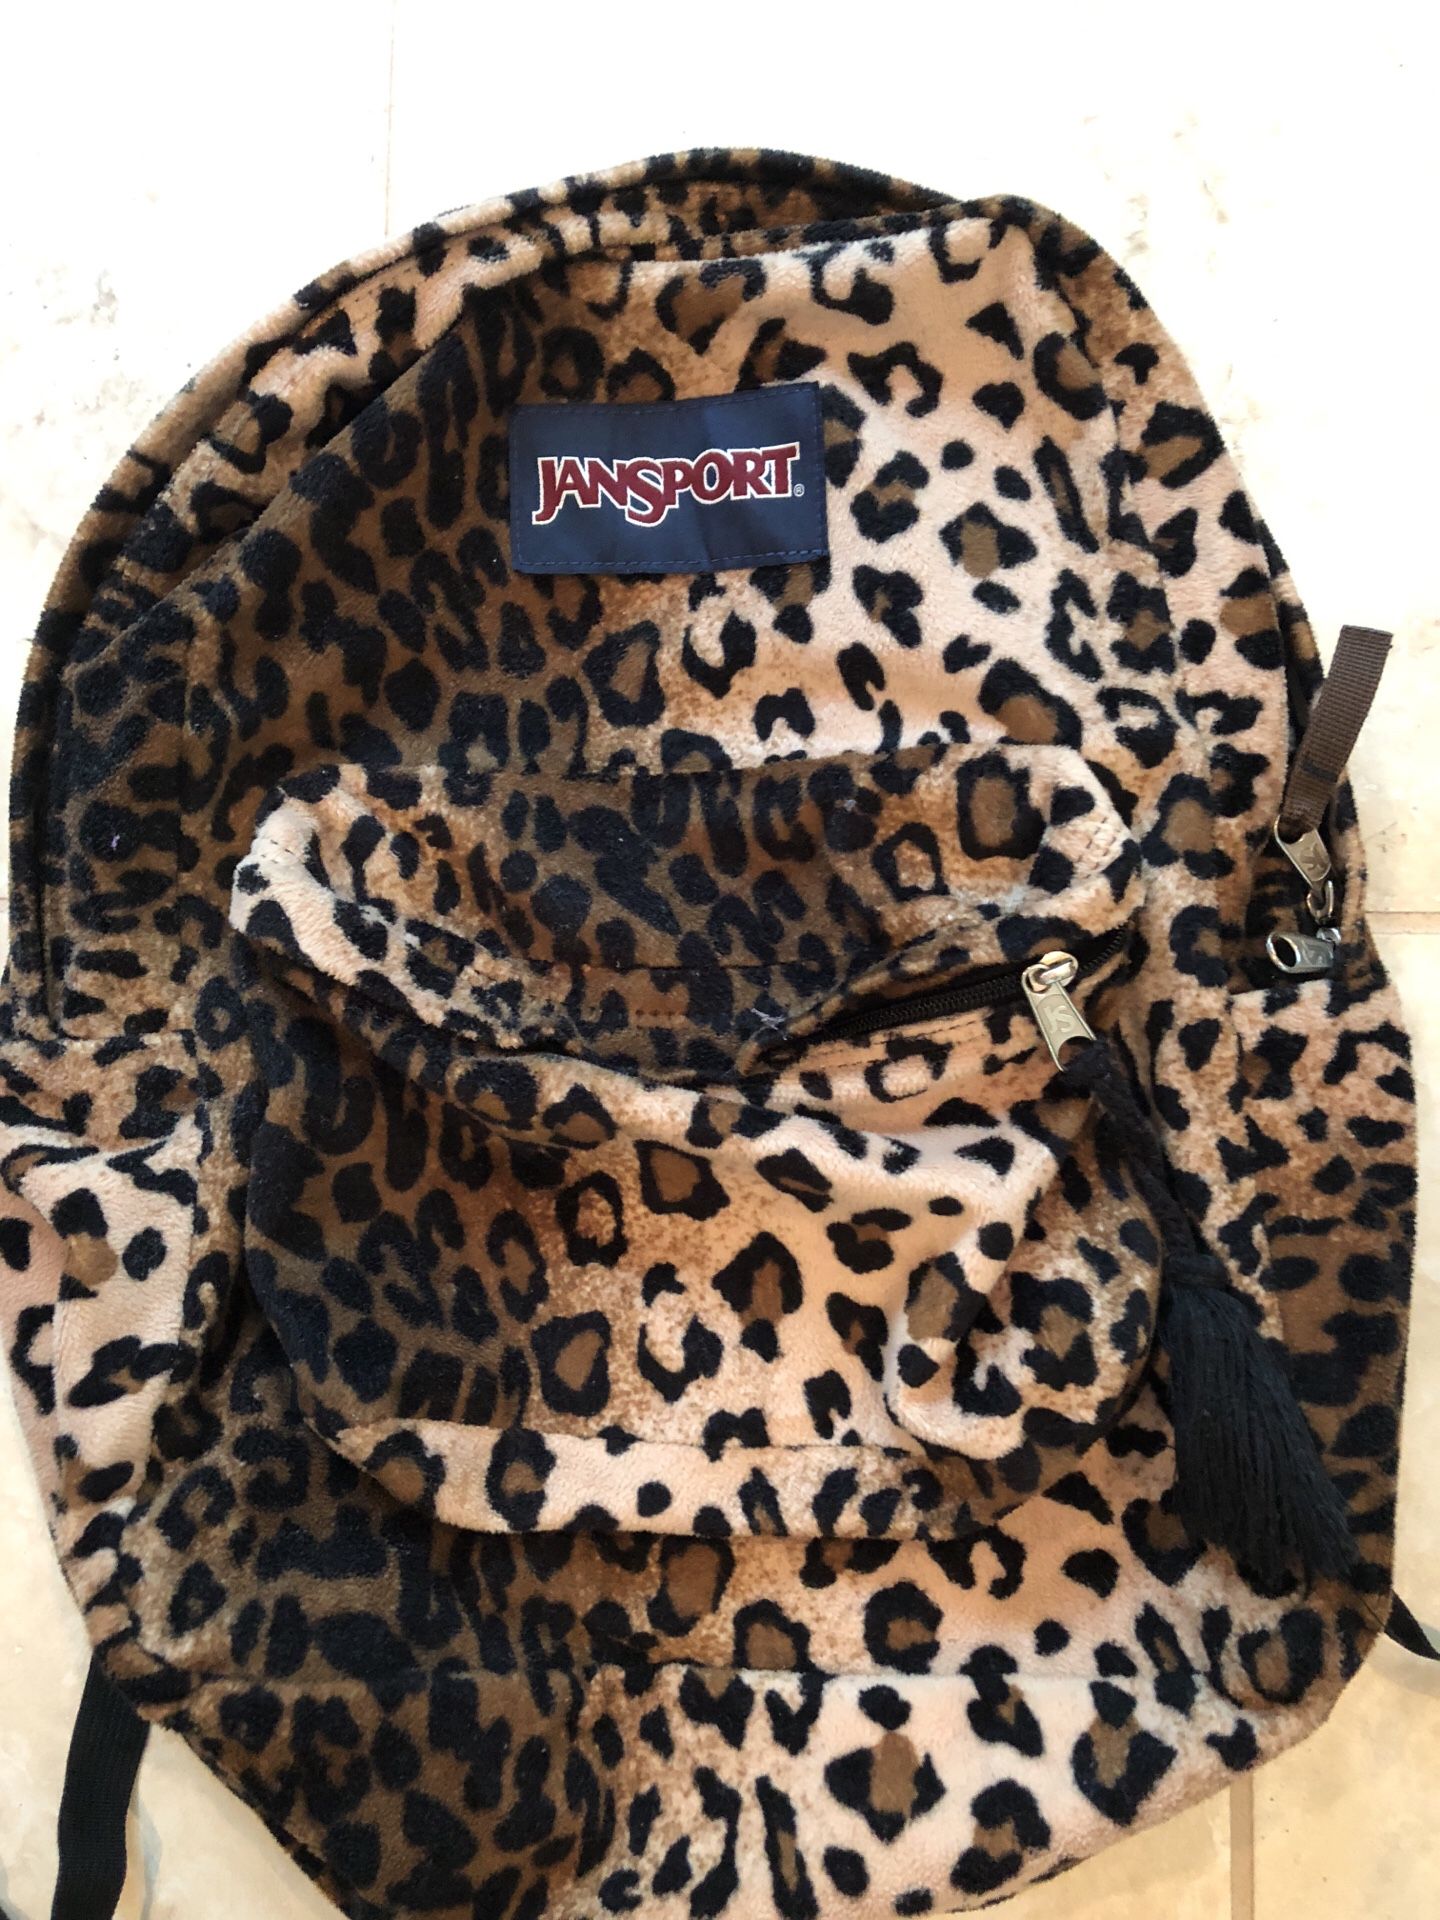 Jansport Cheetah Print Backpack for Sale in Phoenix, AZ - OfferUp